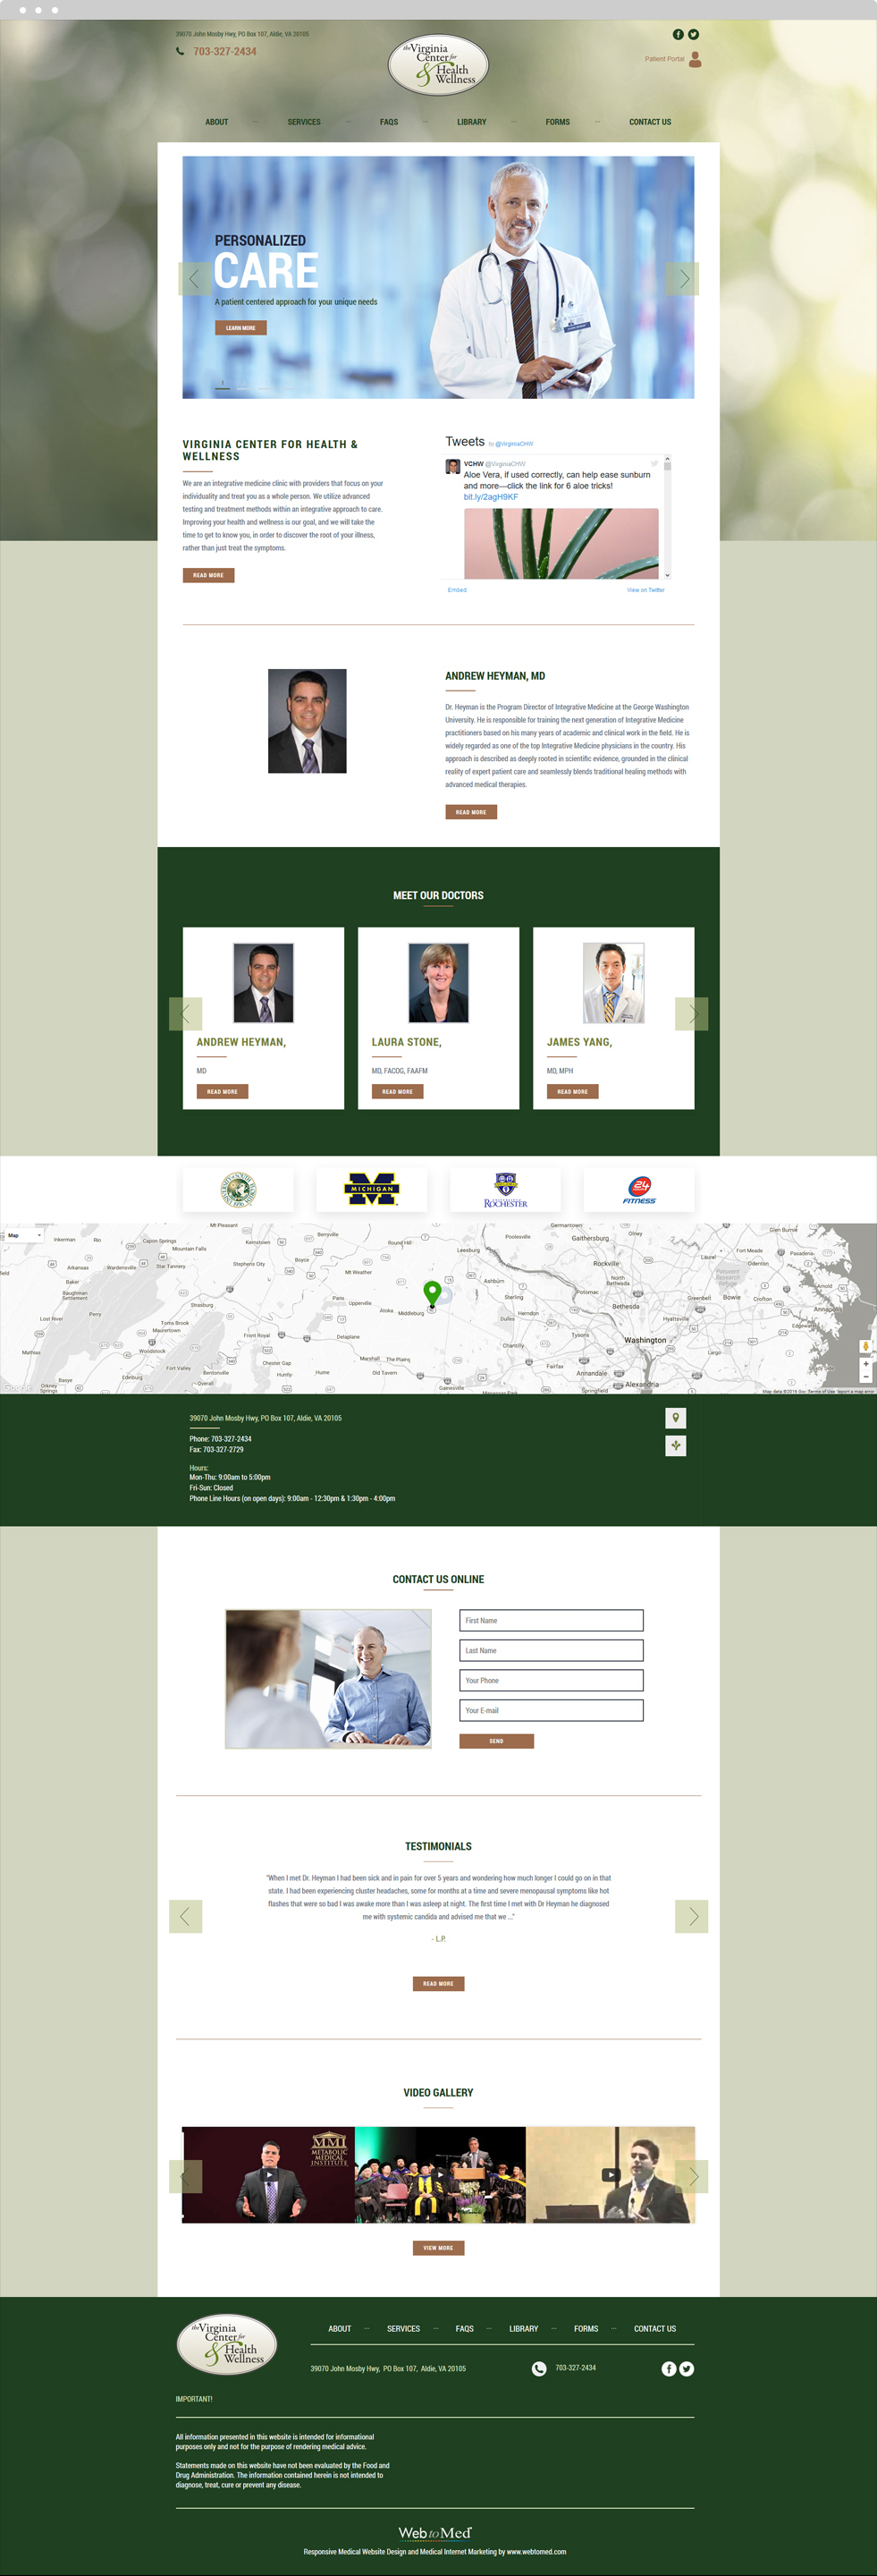 Functional Medicine Website Design - The Virginia Center for Health & Wellness - Homepage